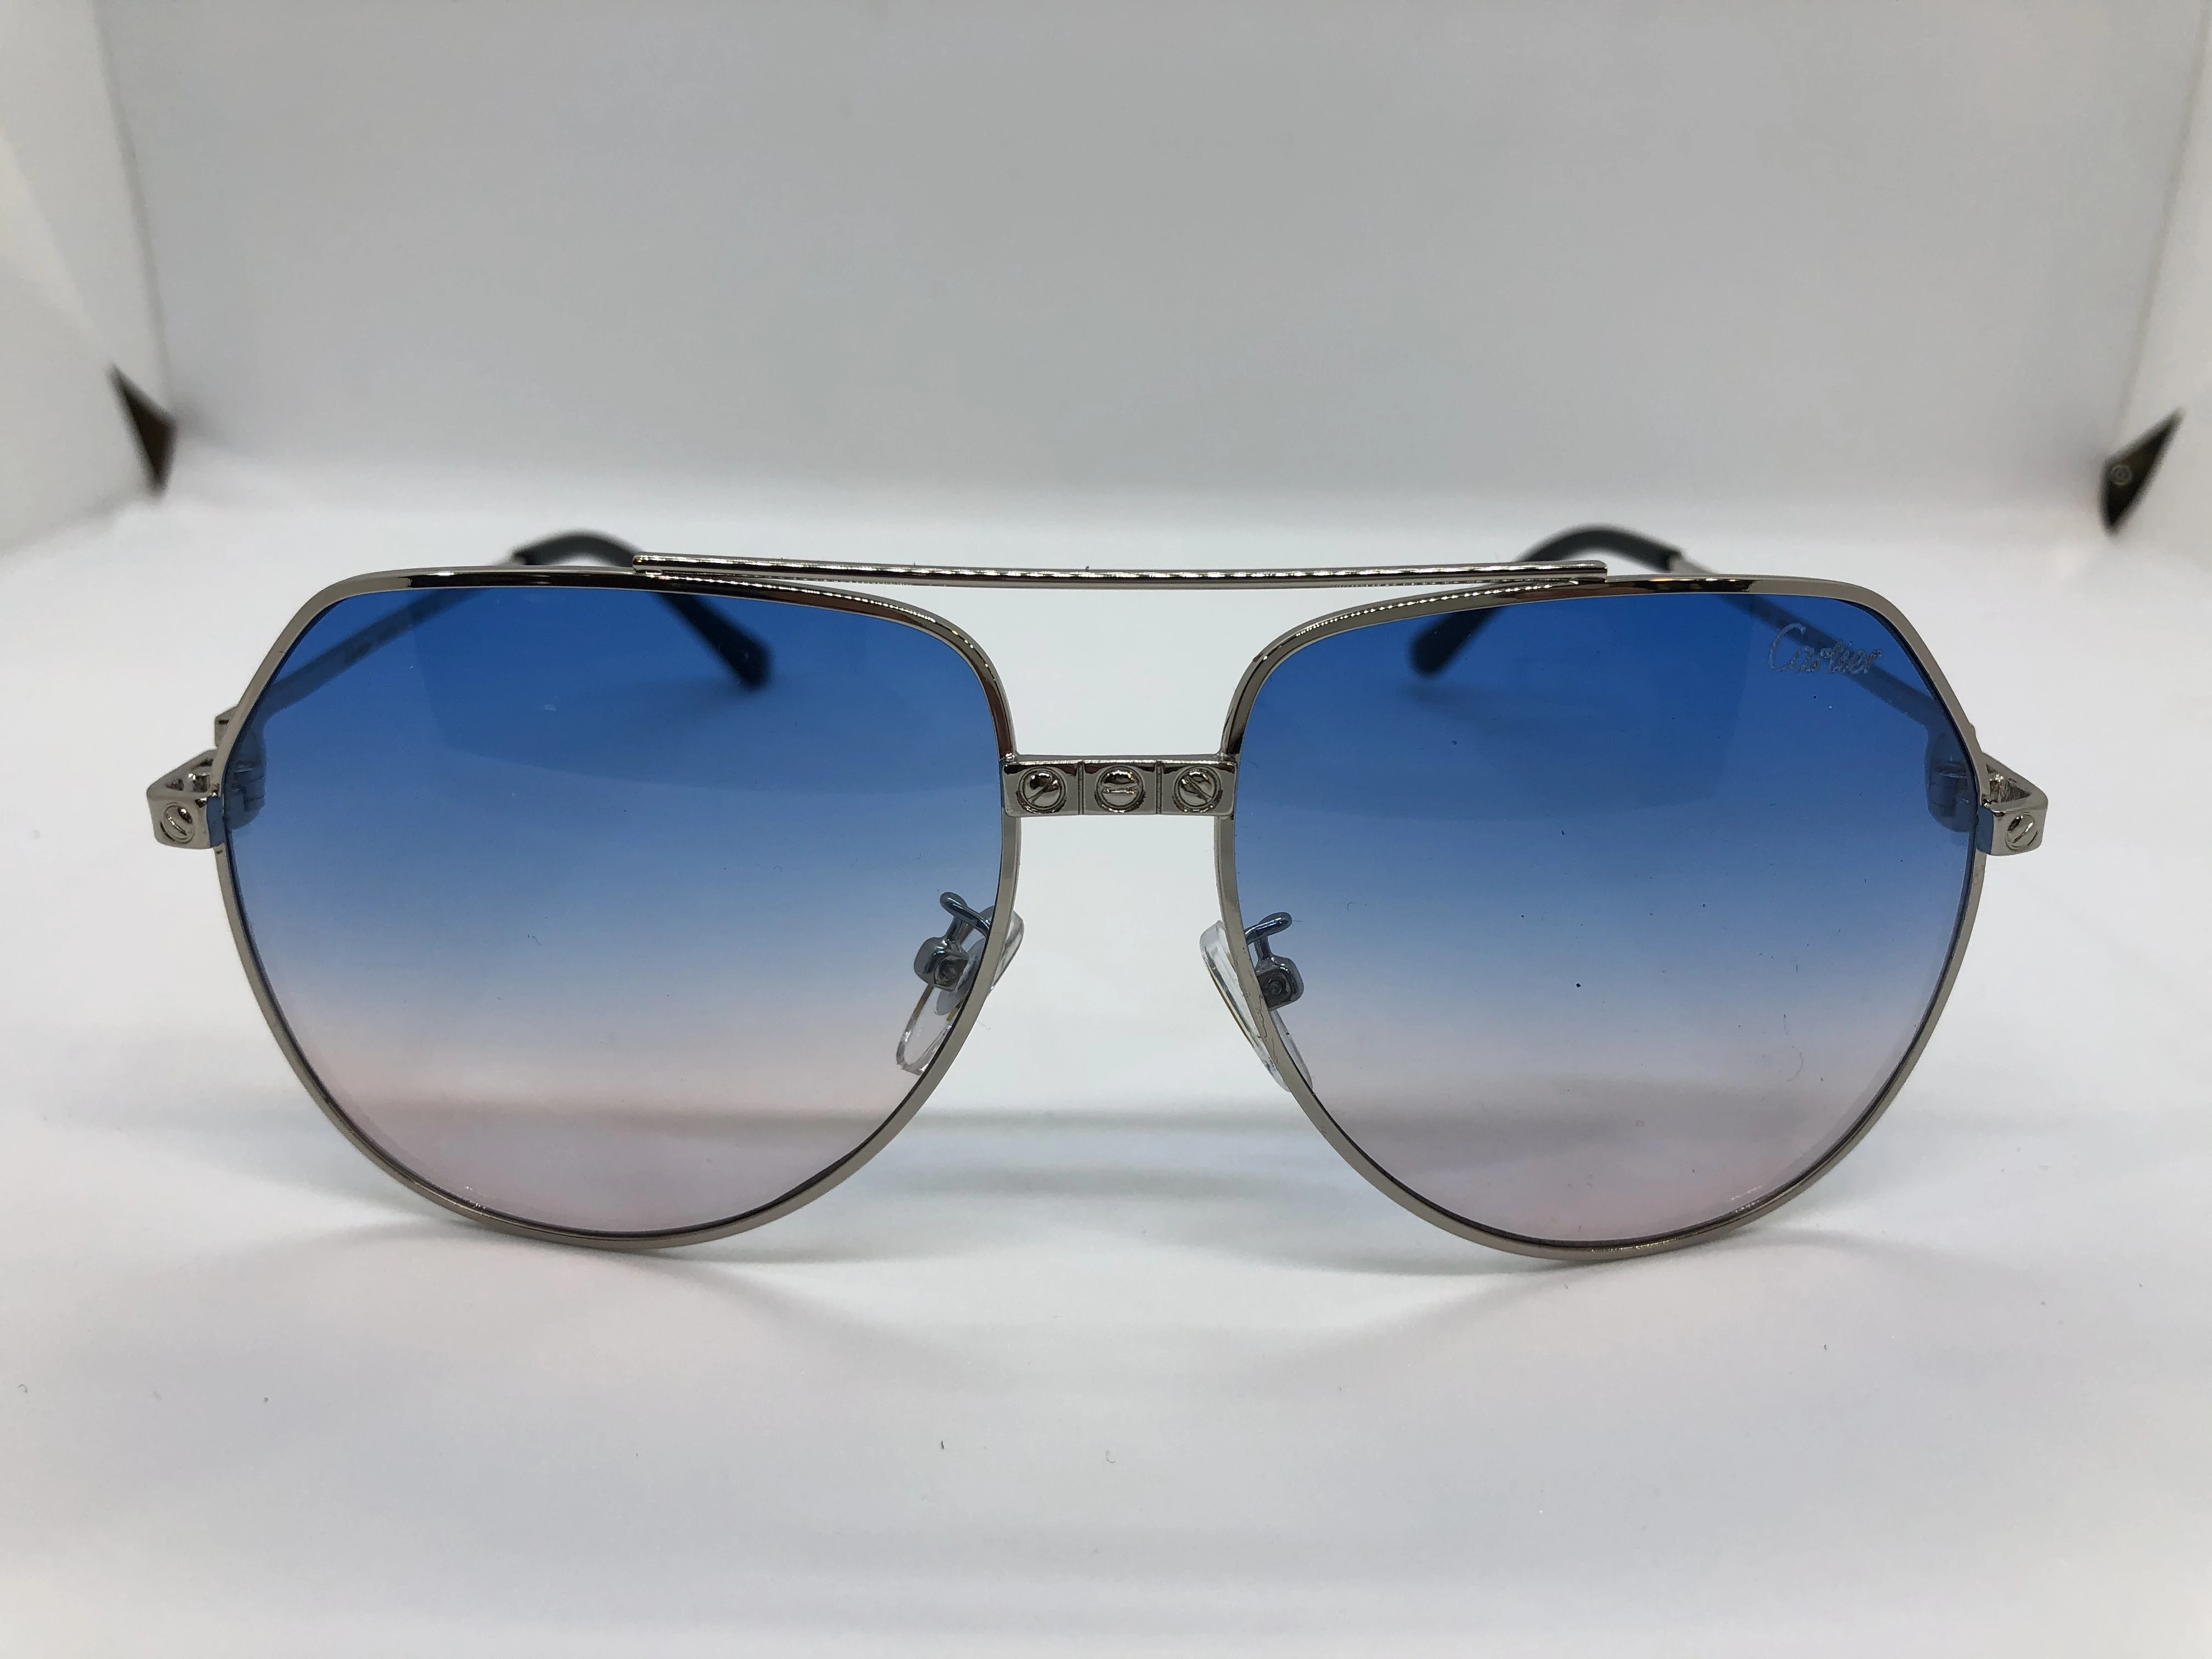 Cartier sunglasses - silver metal frame - blue gradient color lenses - silver metal arm - for women